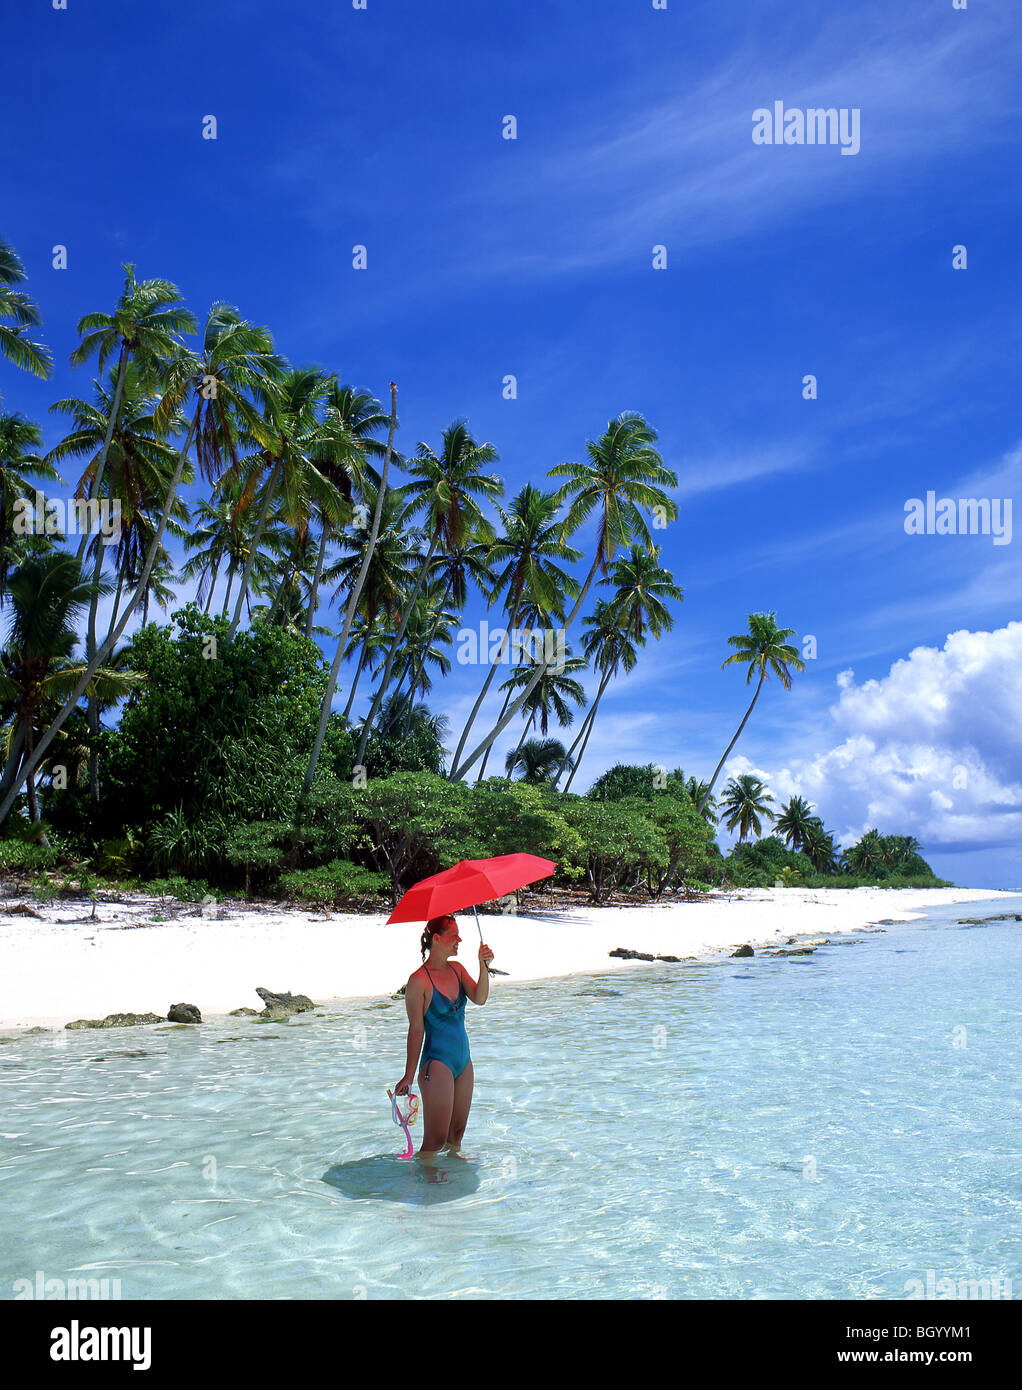 Junge Frau am tropischen Strand, Aitutaki Atoll, Cook-Inseln Stockfoto